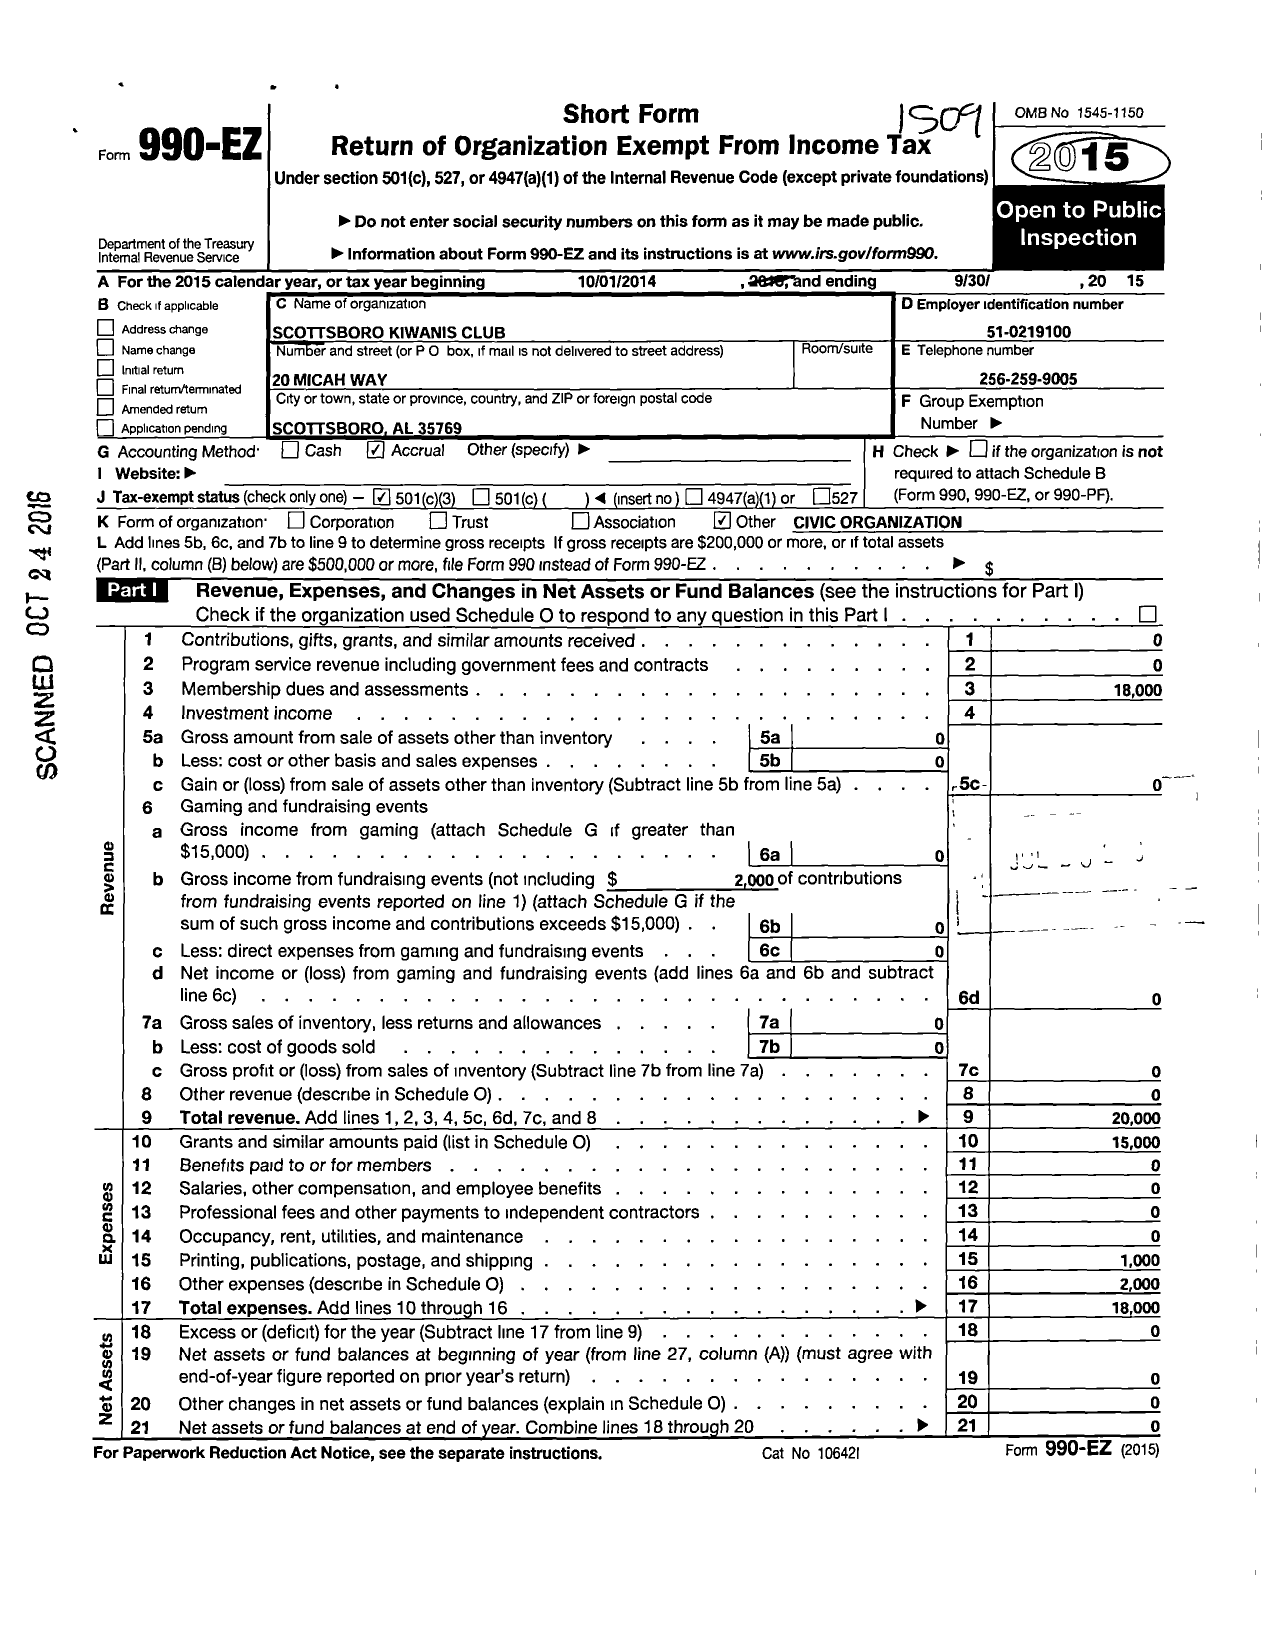 Image of first page of 2014 Form 990EZ for Kiwanis International - K08594 Scottsboro